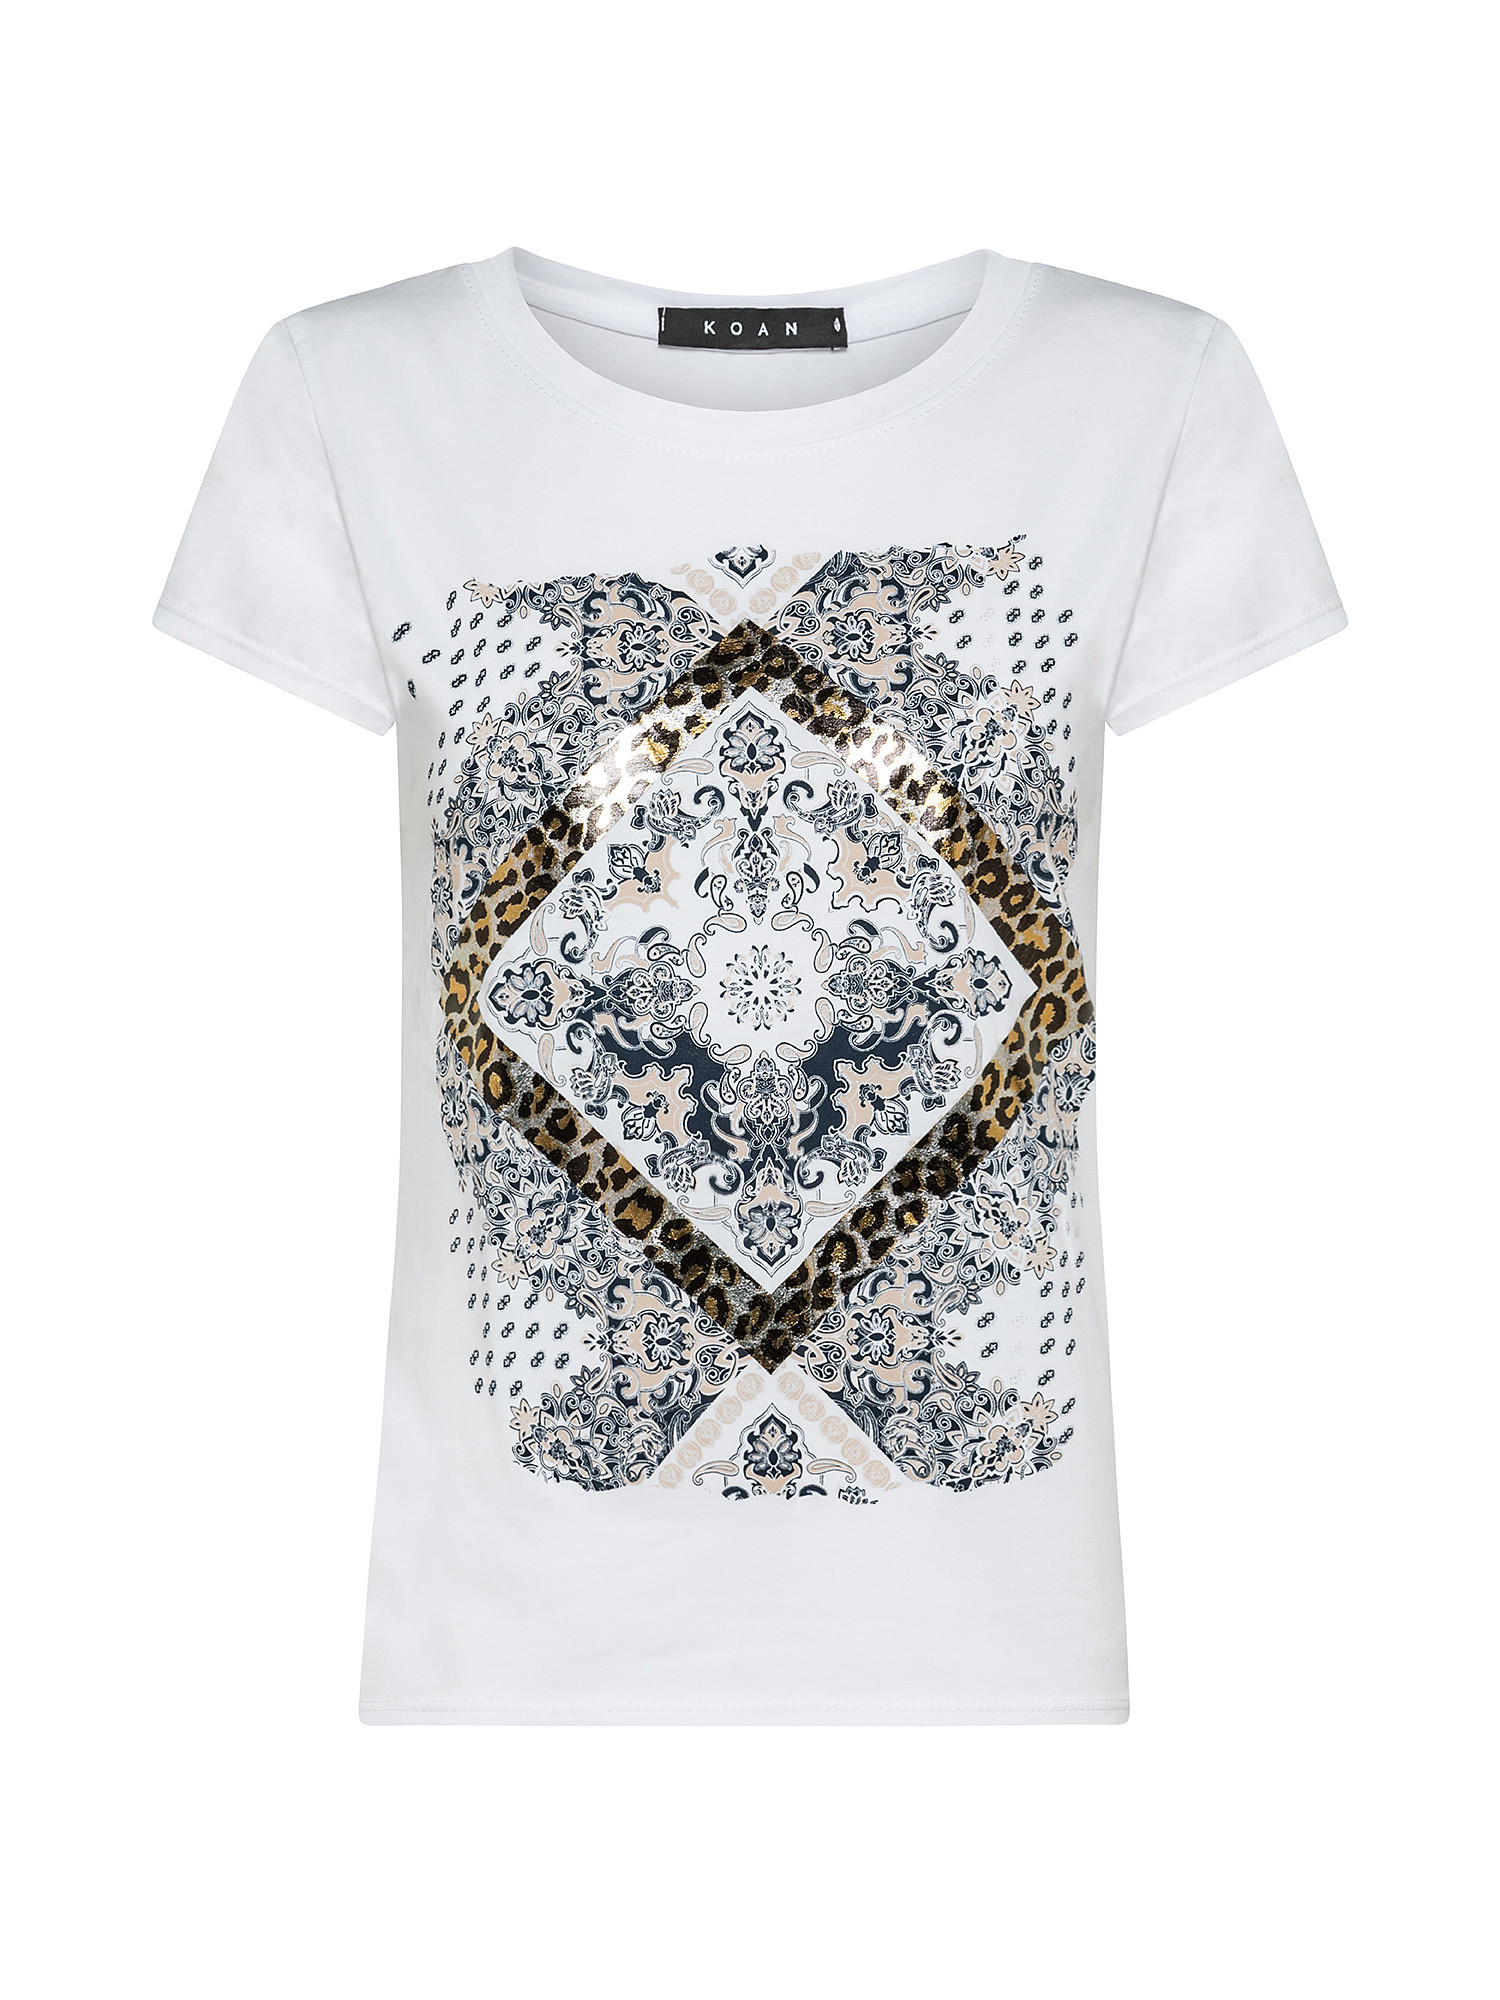 T-shirt girocollo con fiori, Bianco, large image number 0